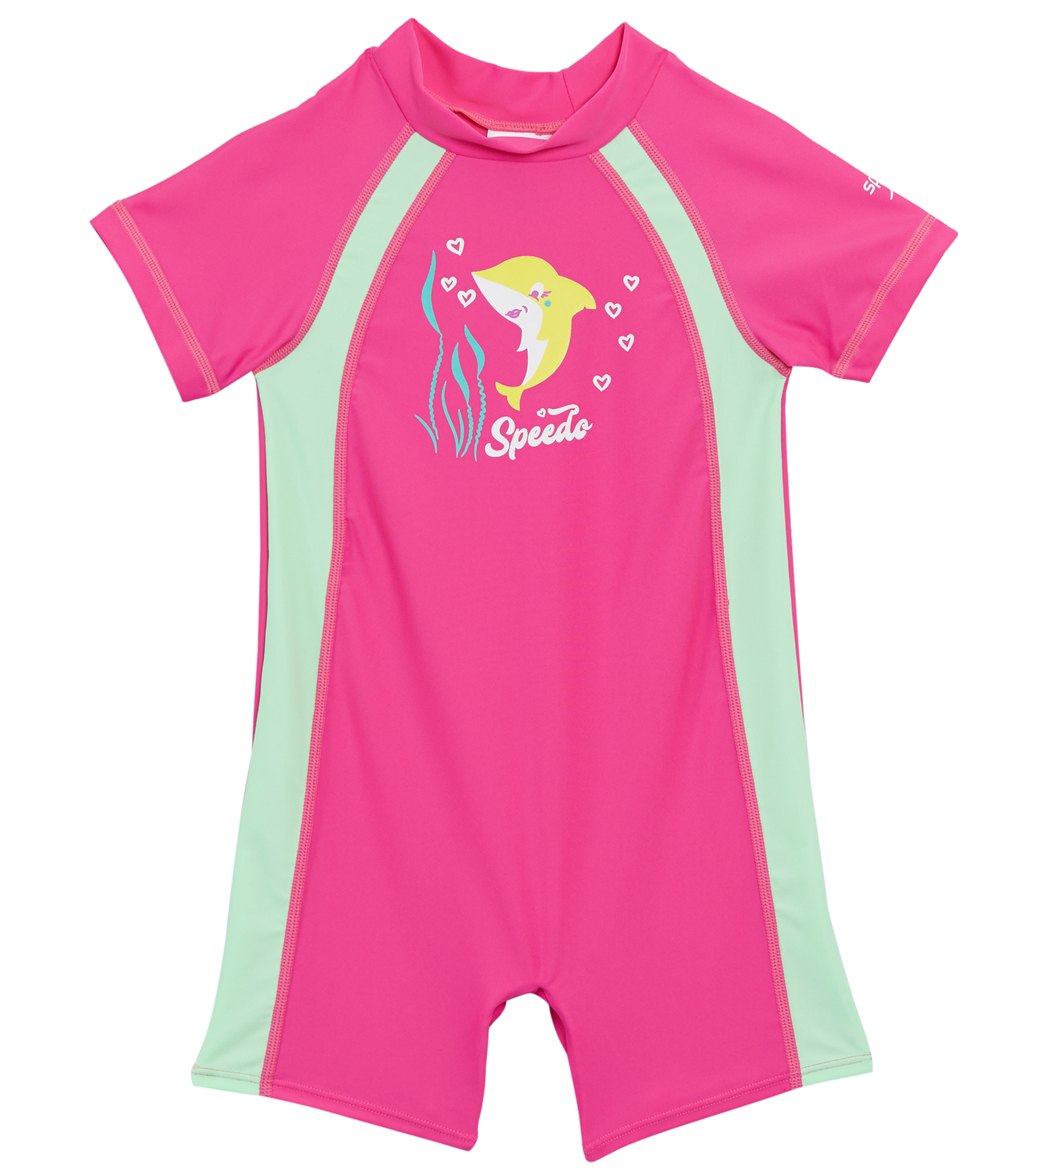 Speedo Begin To Swim Toddler Women's Sun Suit - Bright Pink 12 Months - Swimoutlet.com